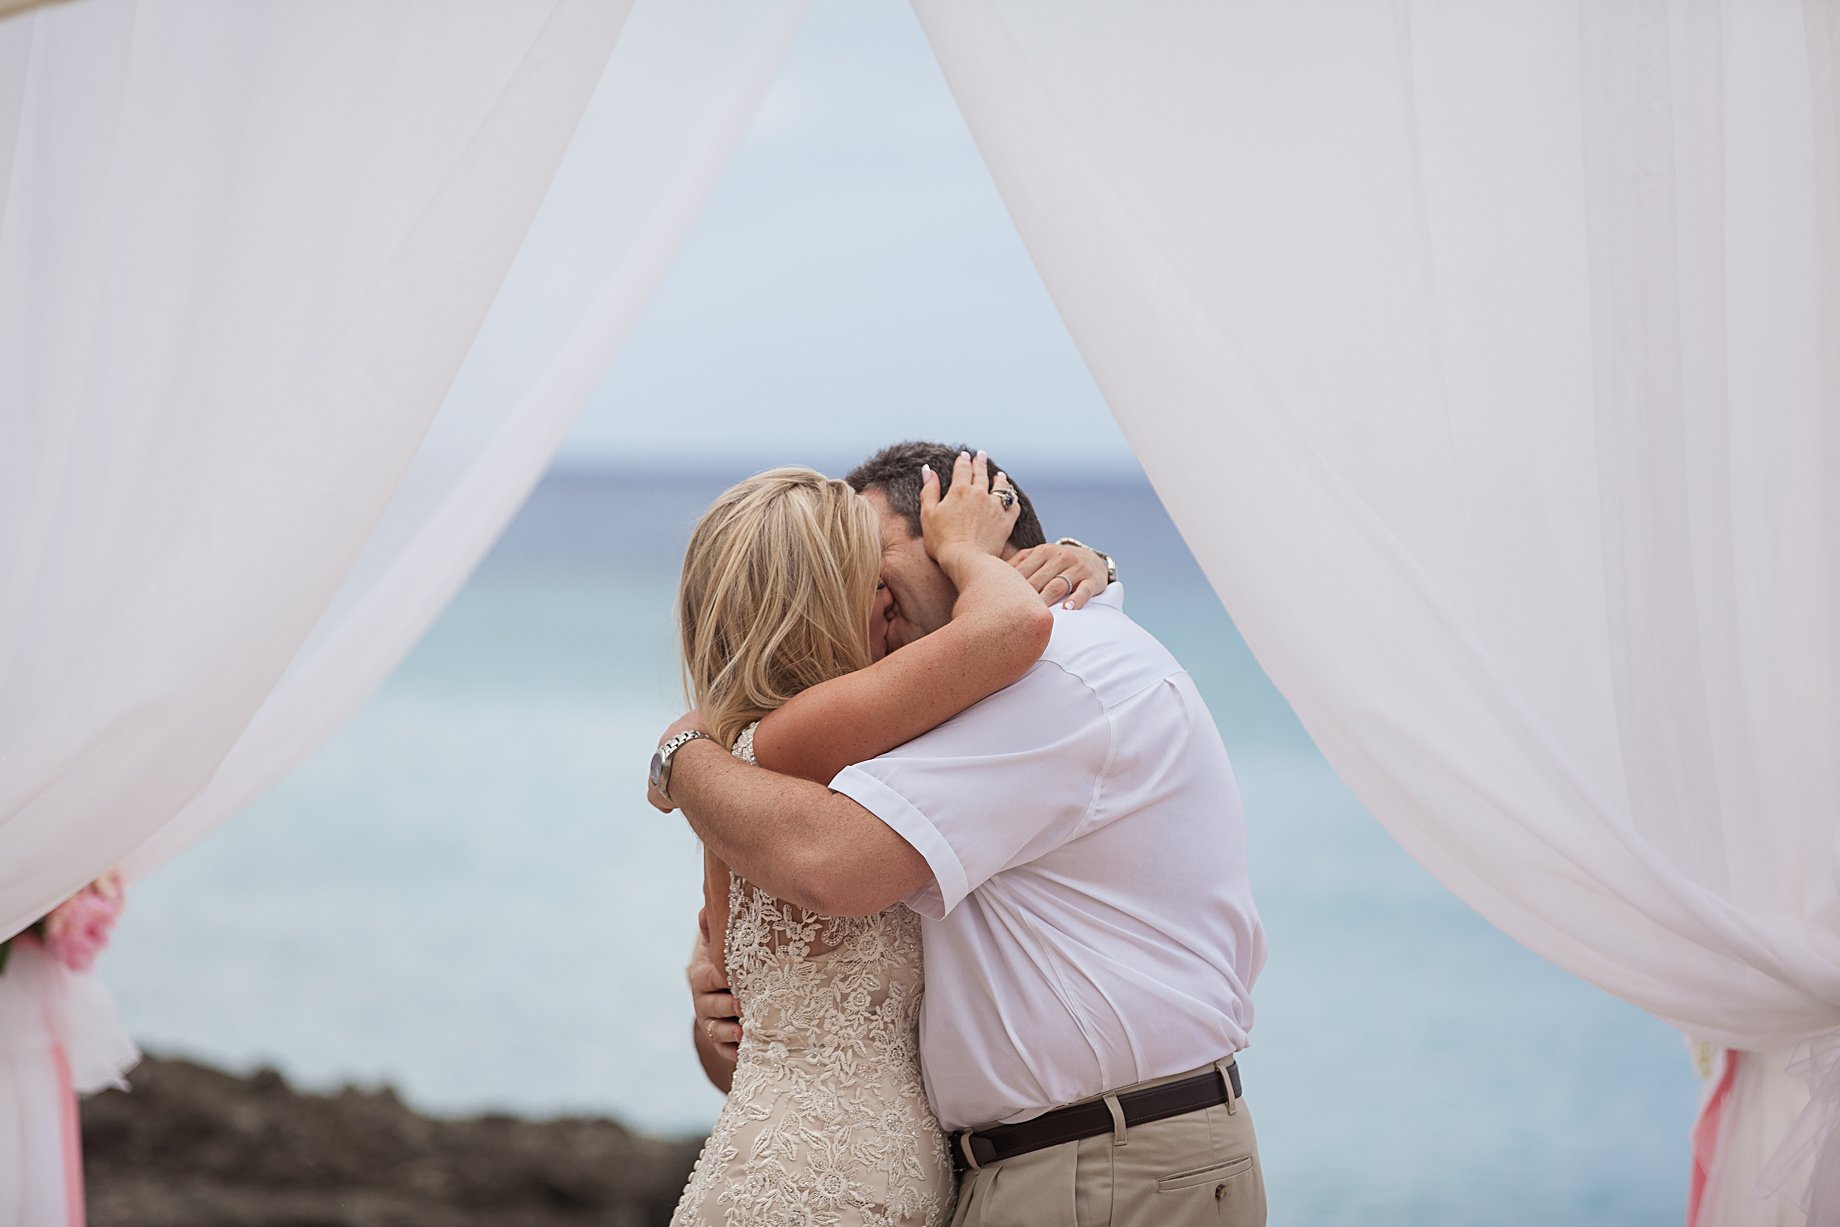 A Smith Cove Wedding | Grand Cayman Islands